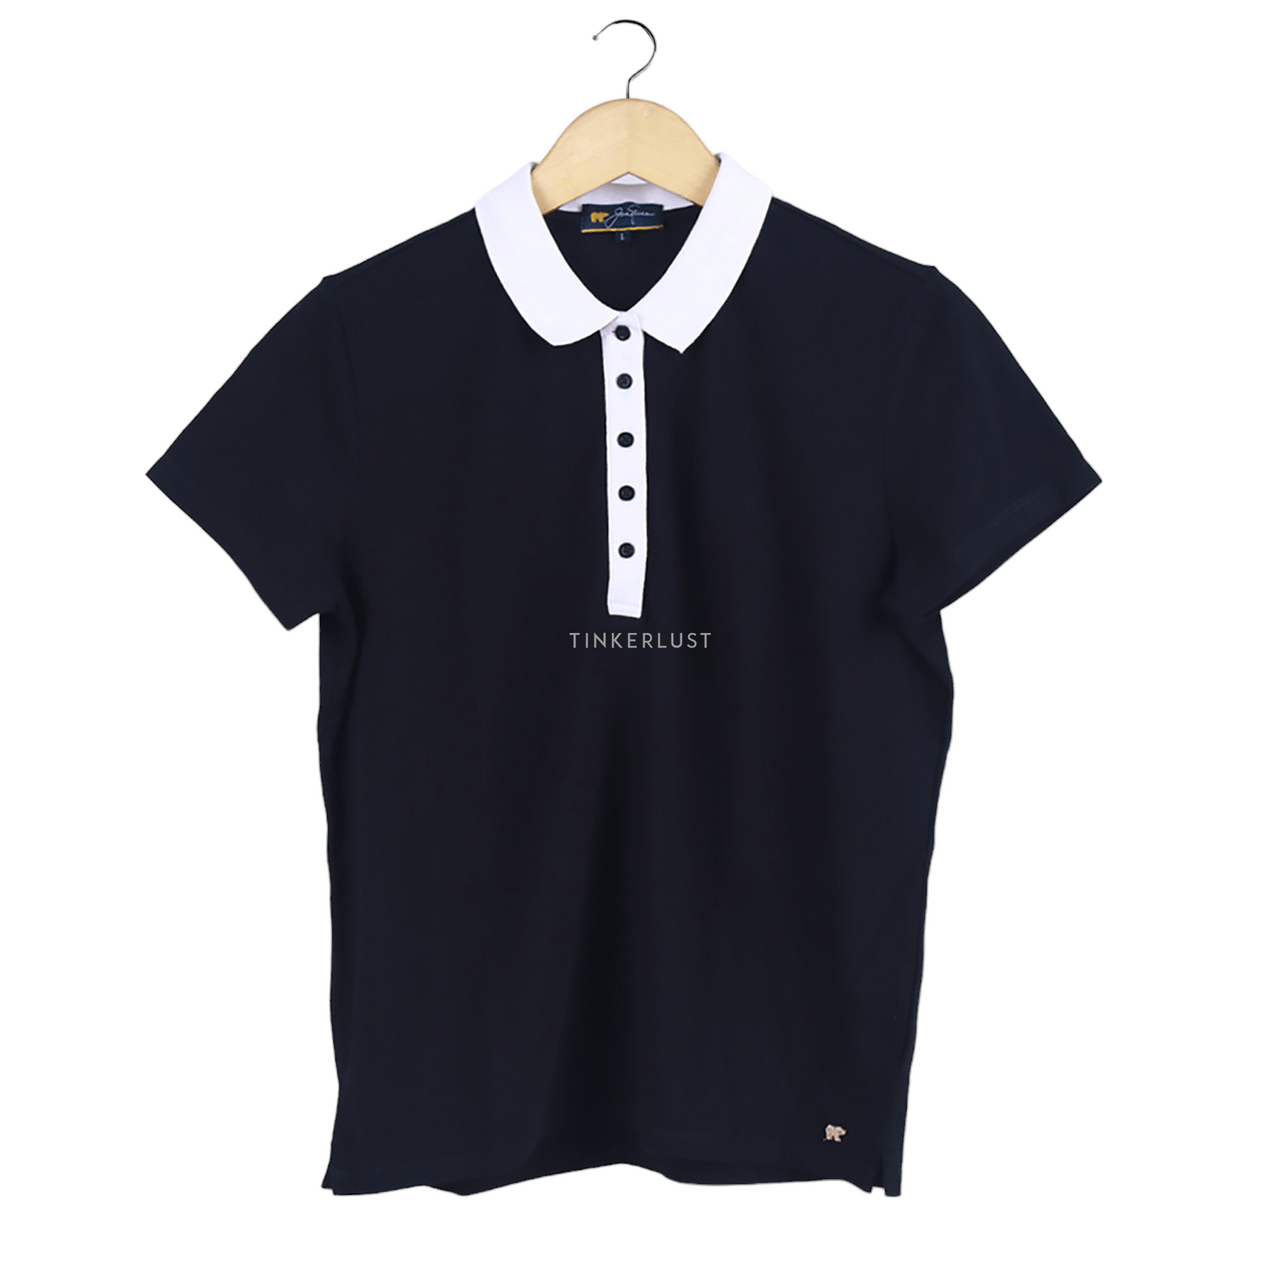 Jack Nicklaus Black Polo T-Shirt